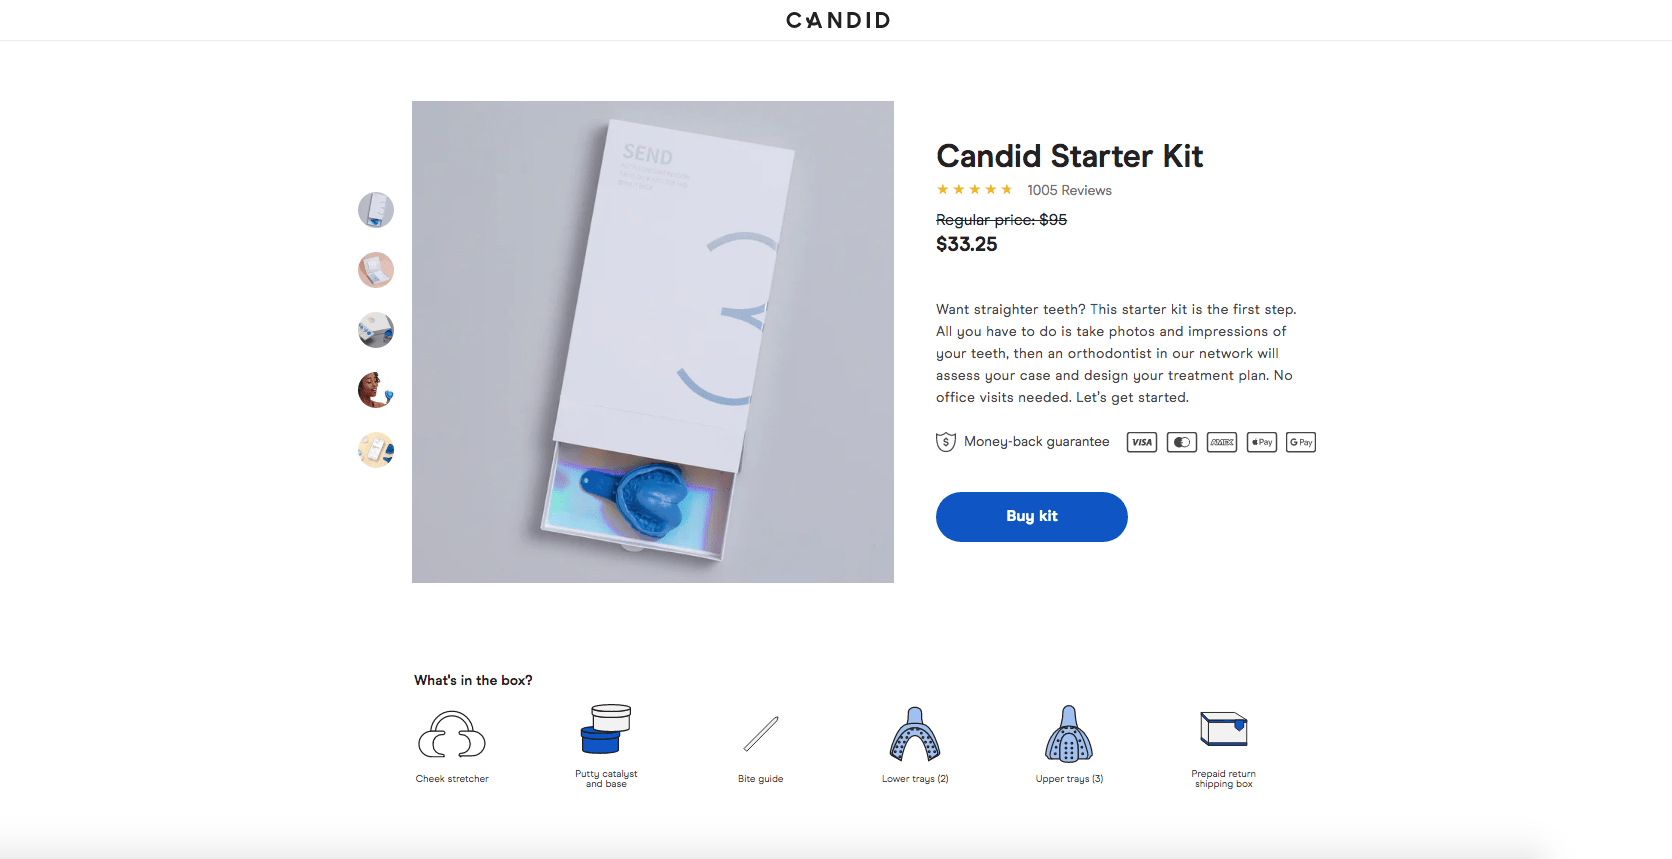 Candid Starter Kit Purchase Webpage